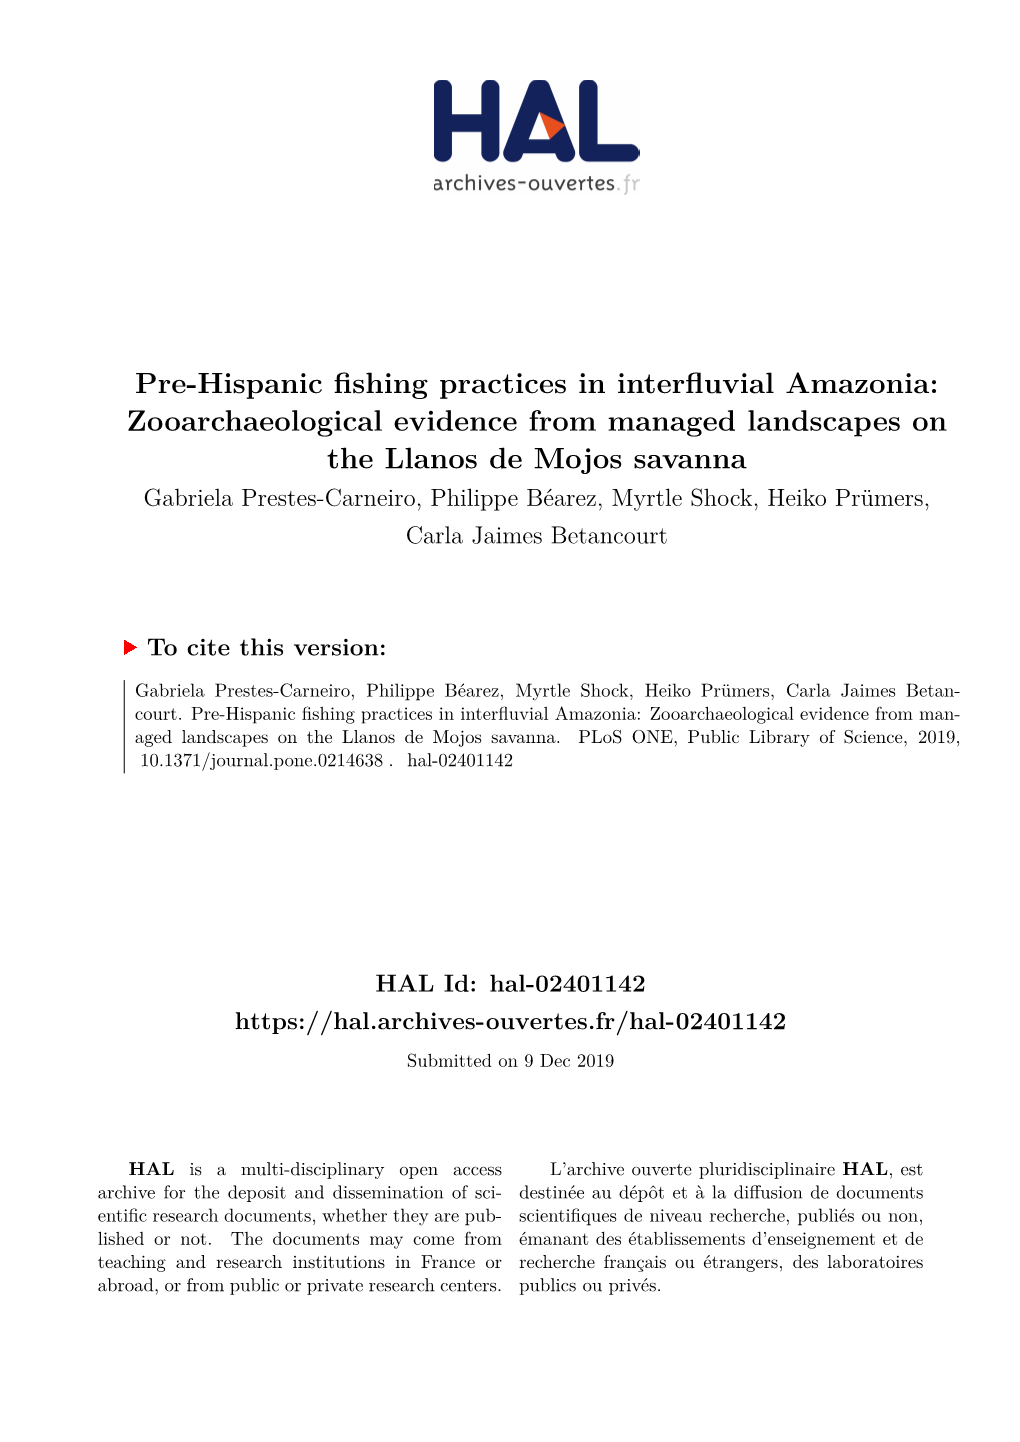 Pre-Hispanic Fishing Practices in Interfluvial